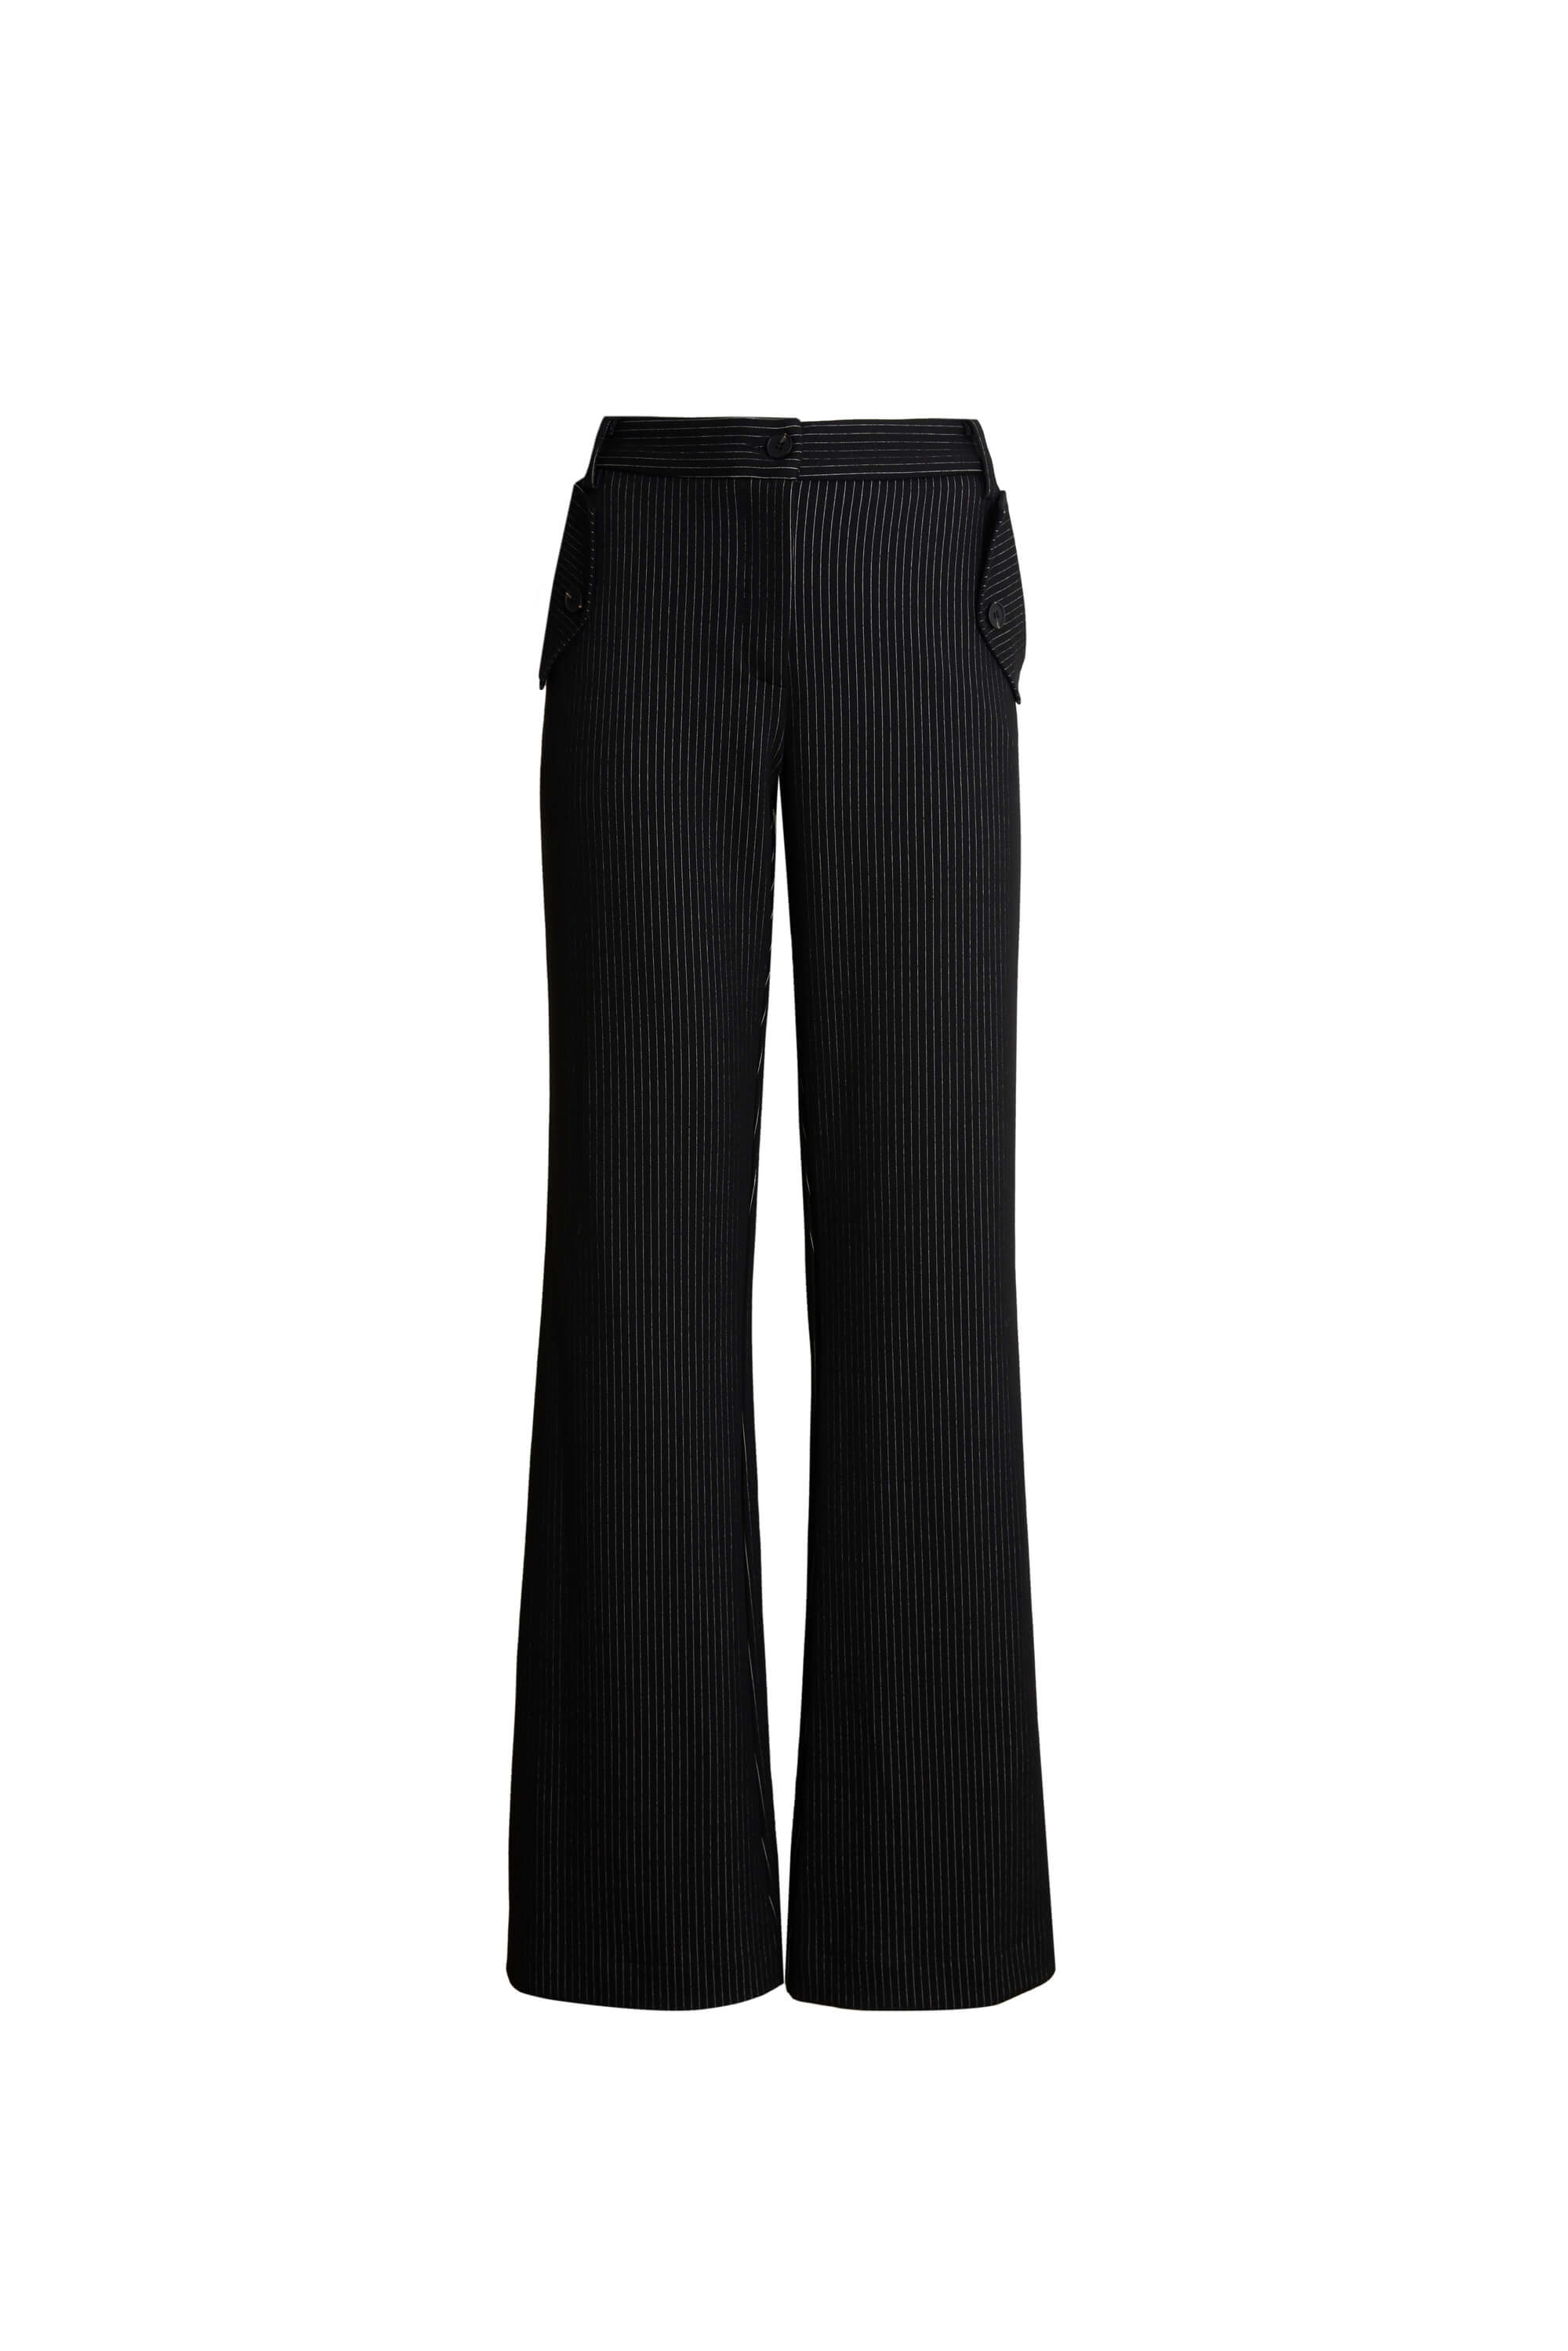 Women’s Black Pin Stripe Tailored Trousers Extra Small James Lakeland